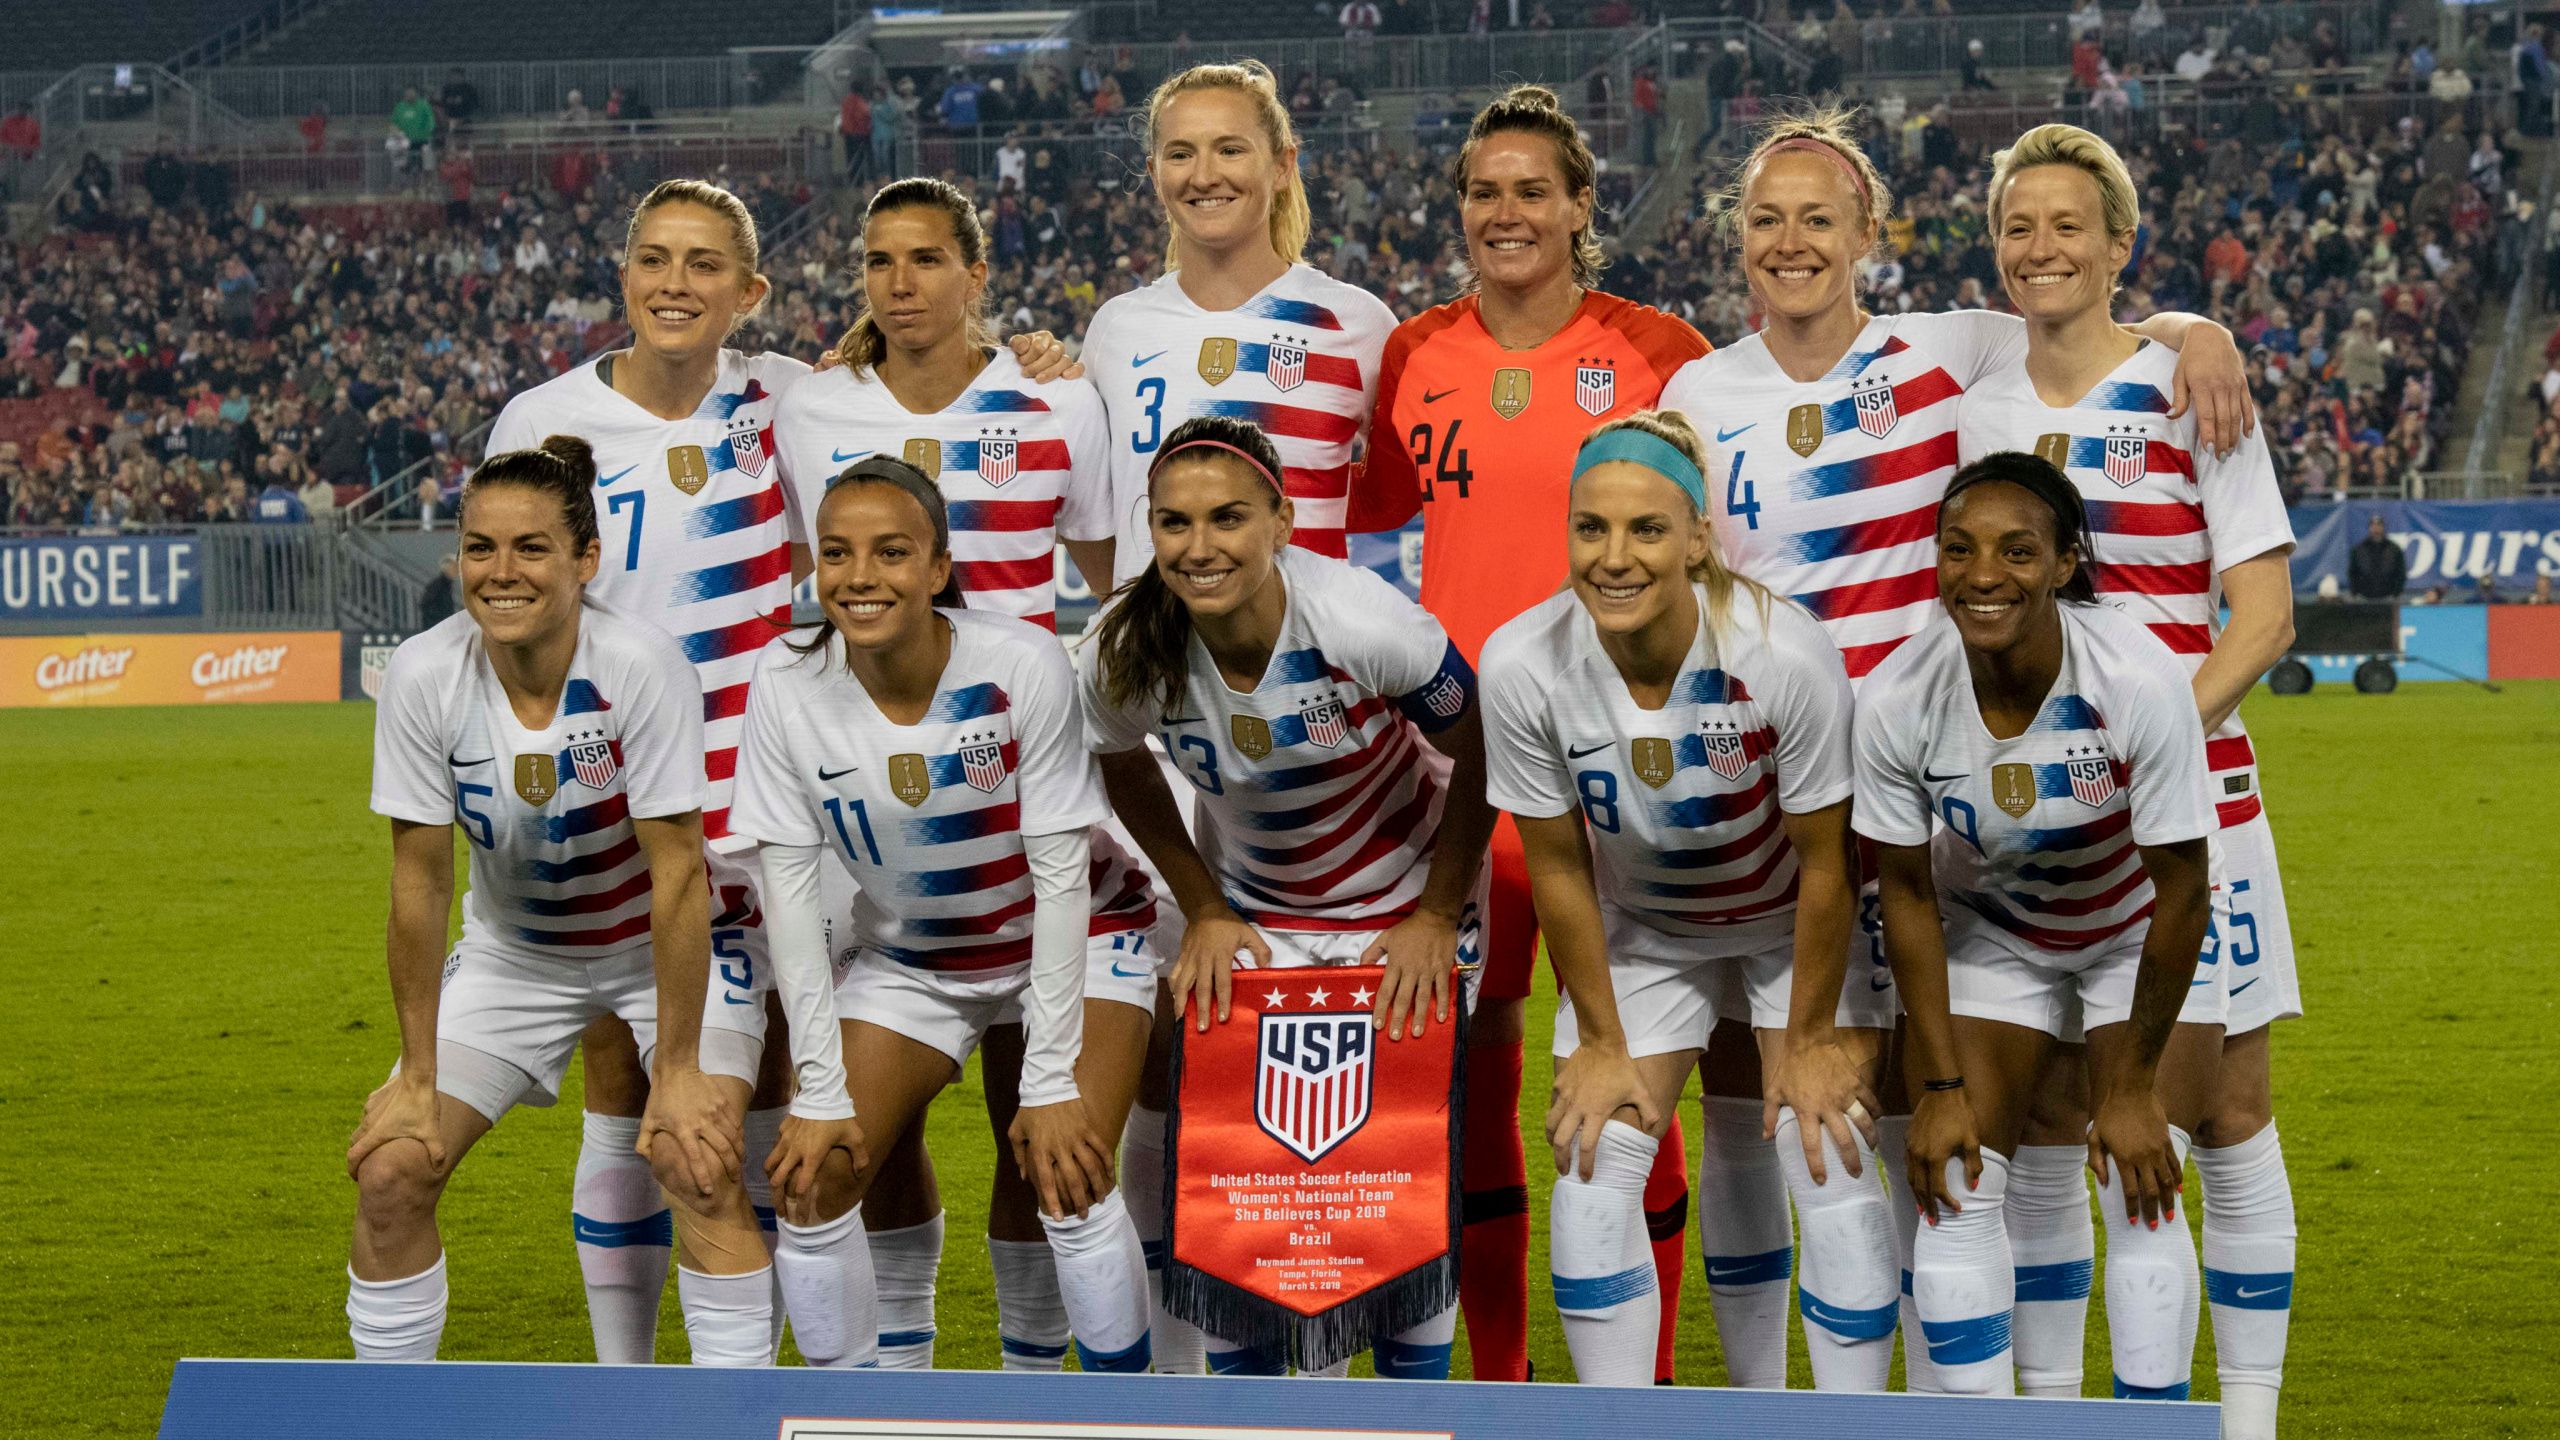 U.S. Women's Soccer Team Sues U.S. Soccer, Alleging Gender Discrimination